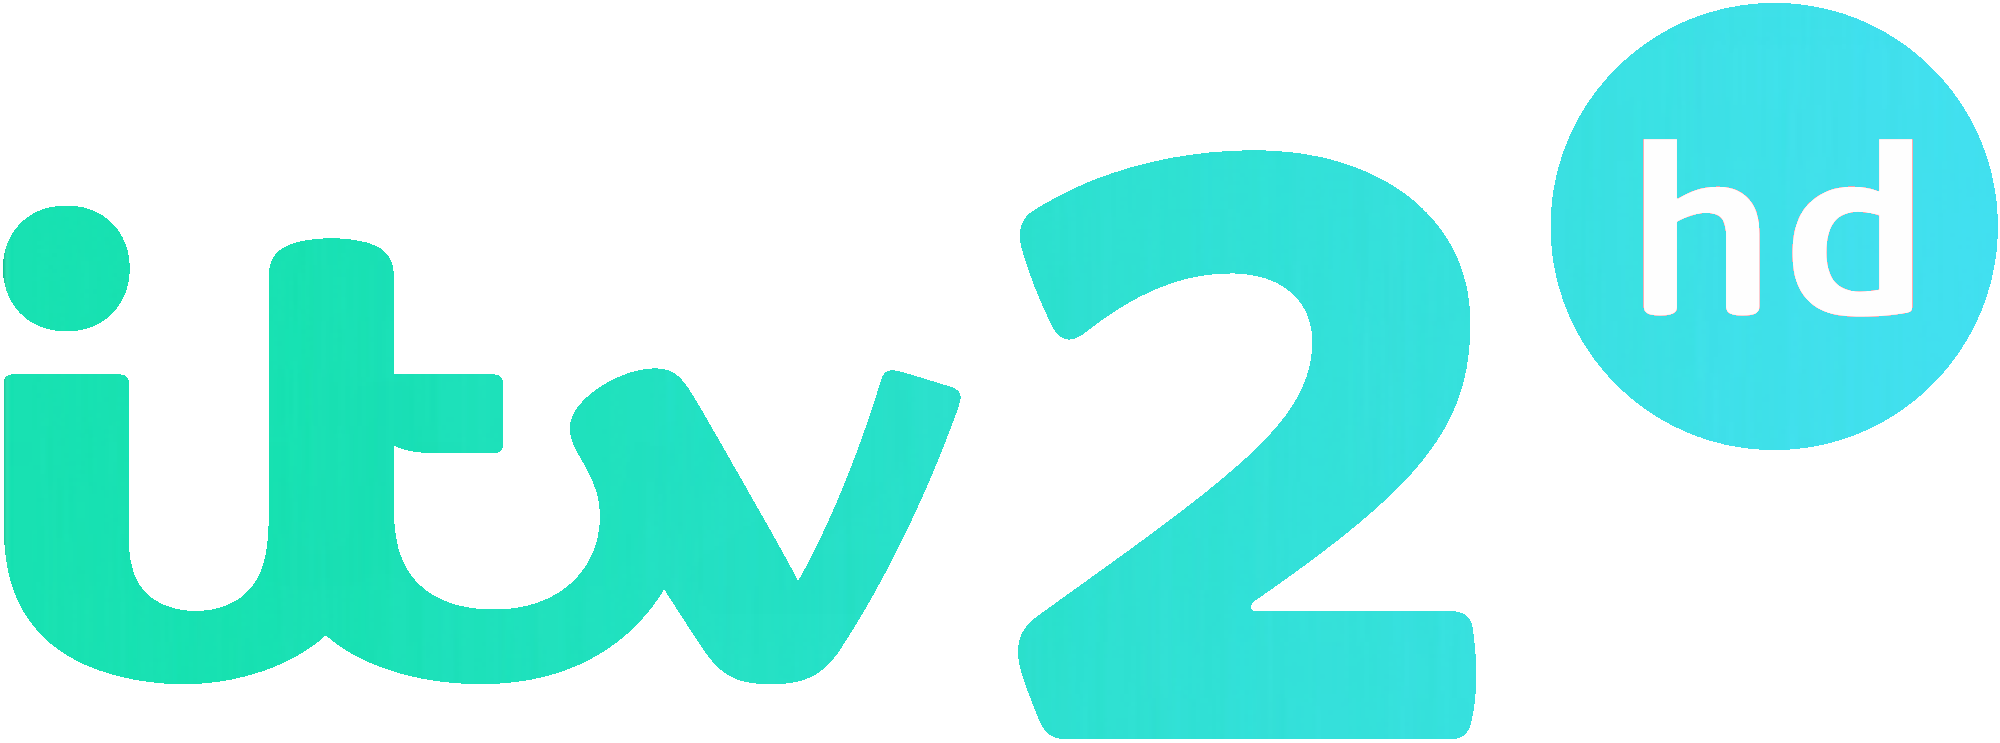 ITV2 logo 2015.png - Itv2 Hd 